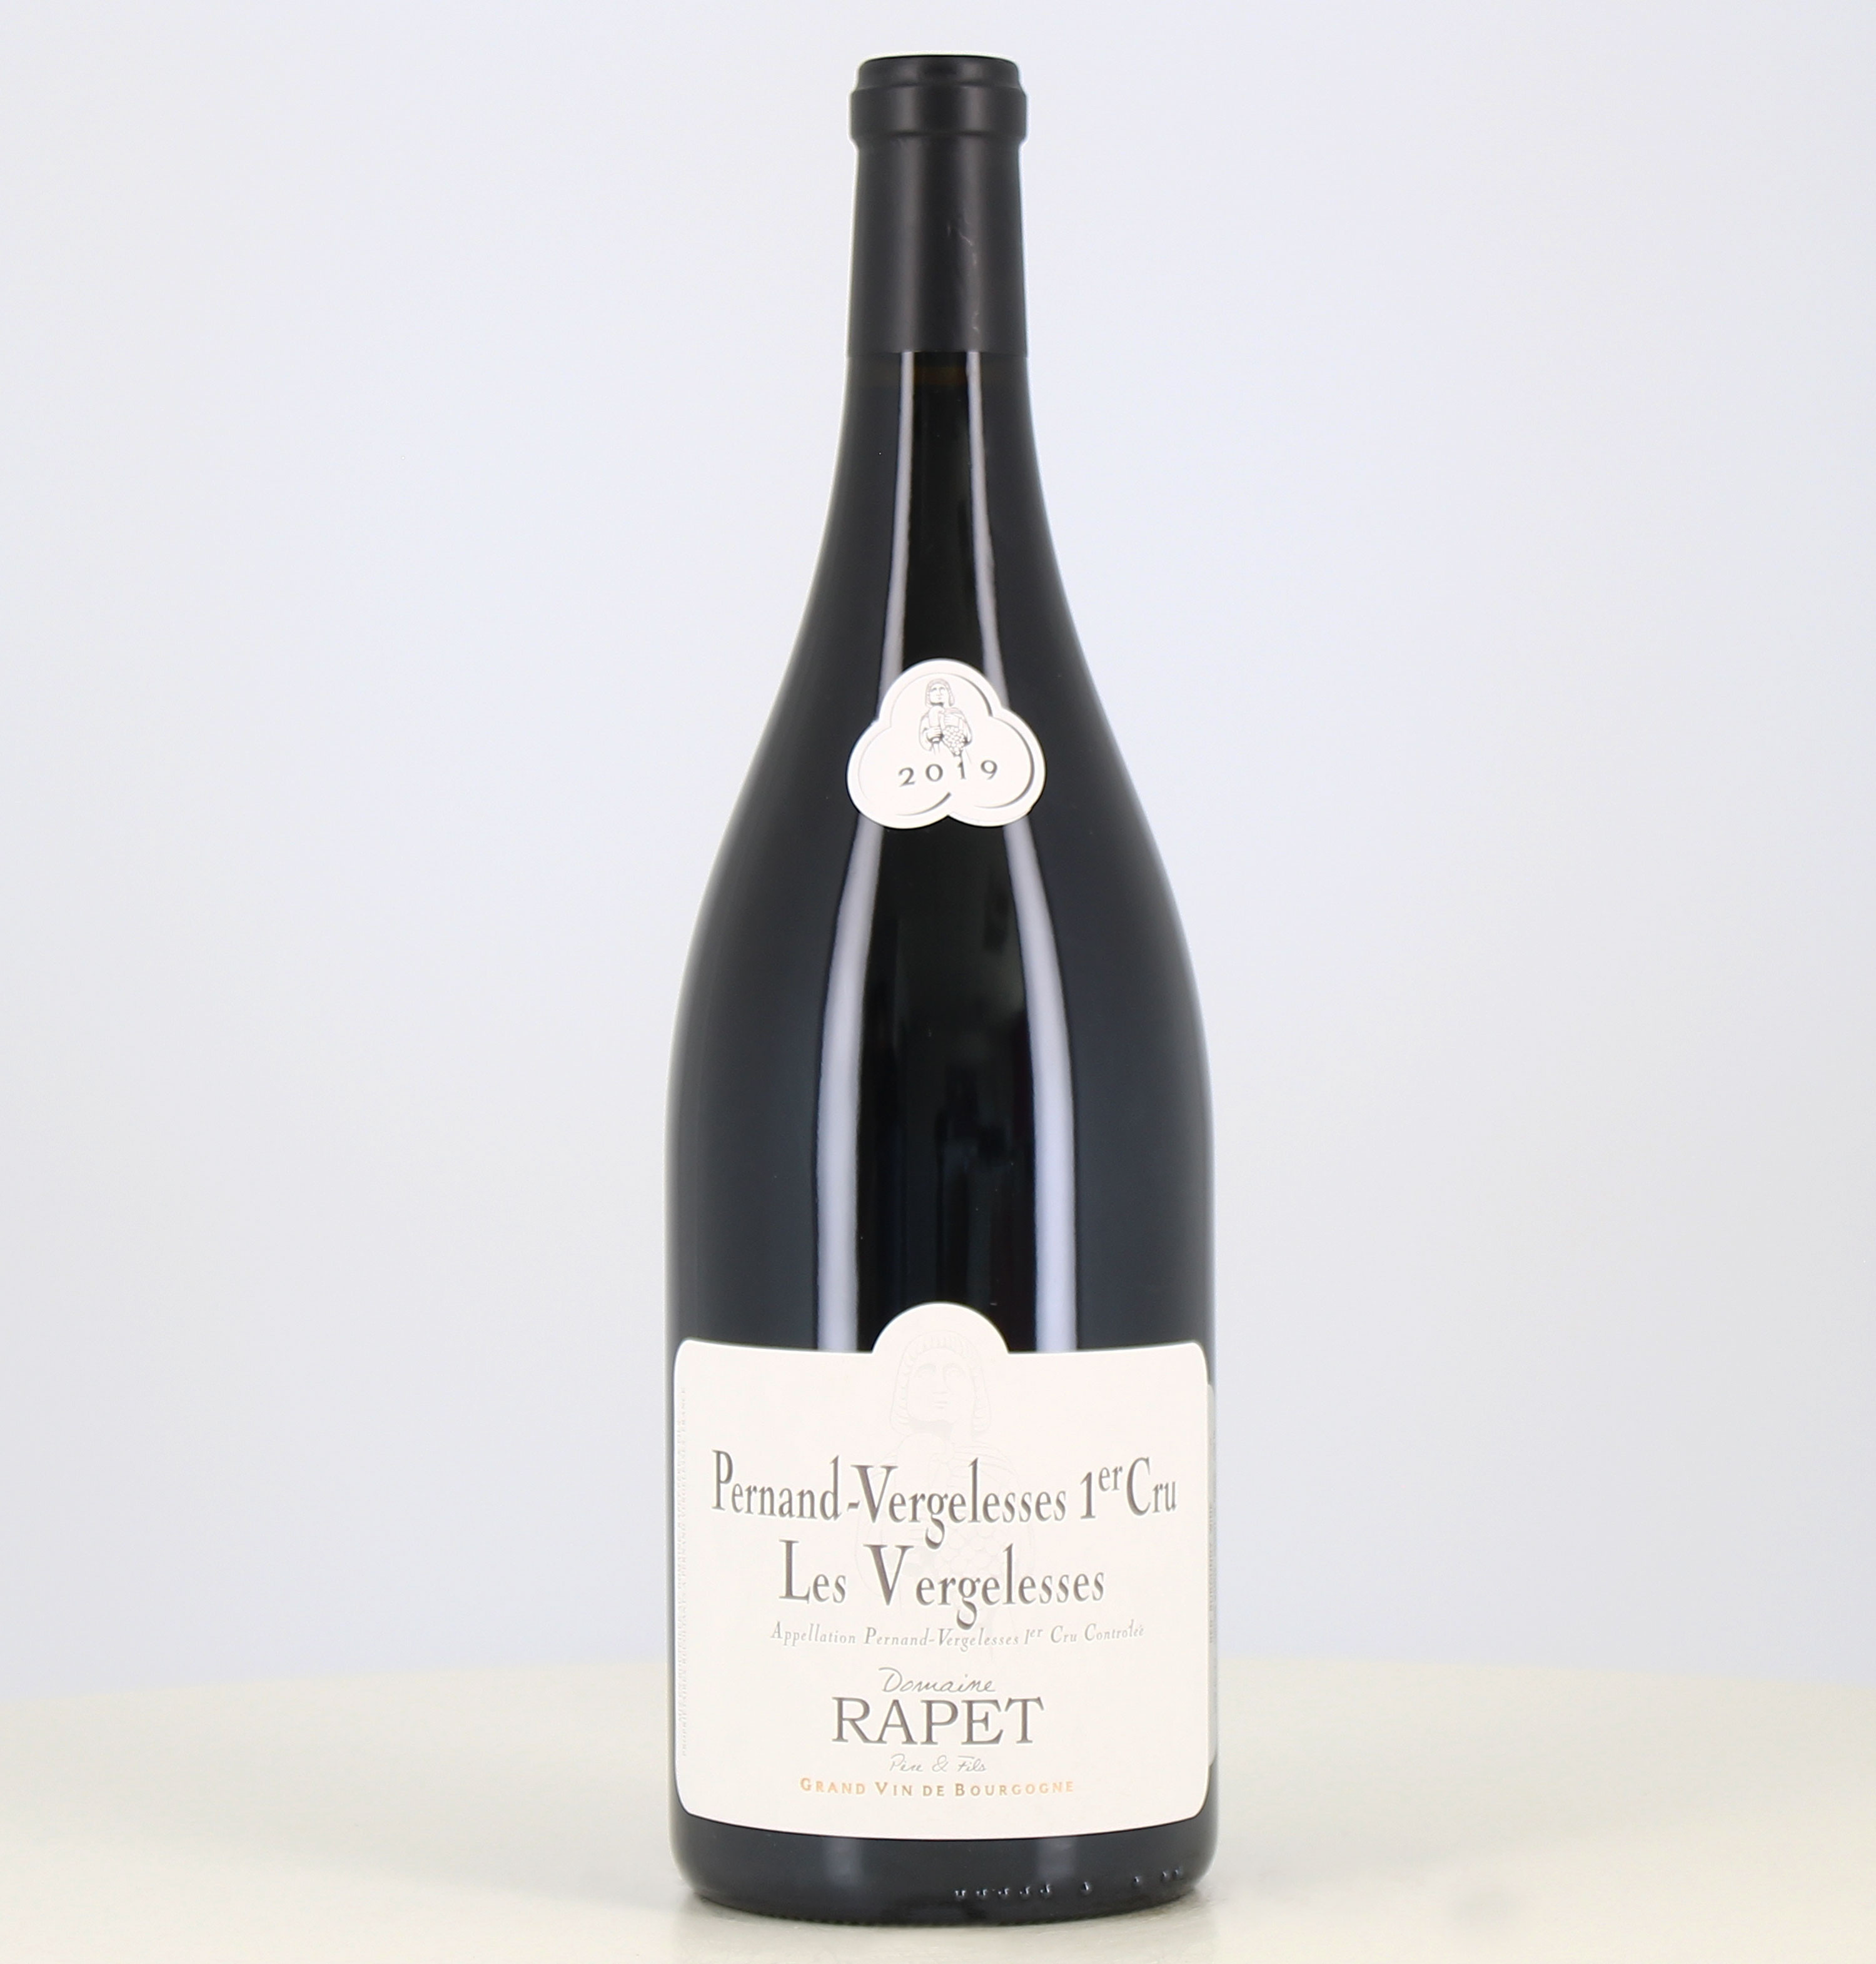 Magnum di vino rosso Pernand Vergelesses 1er cru Les Vergelesses dell'azienda Rapet 2019. 